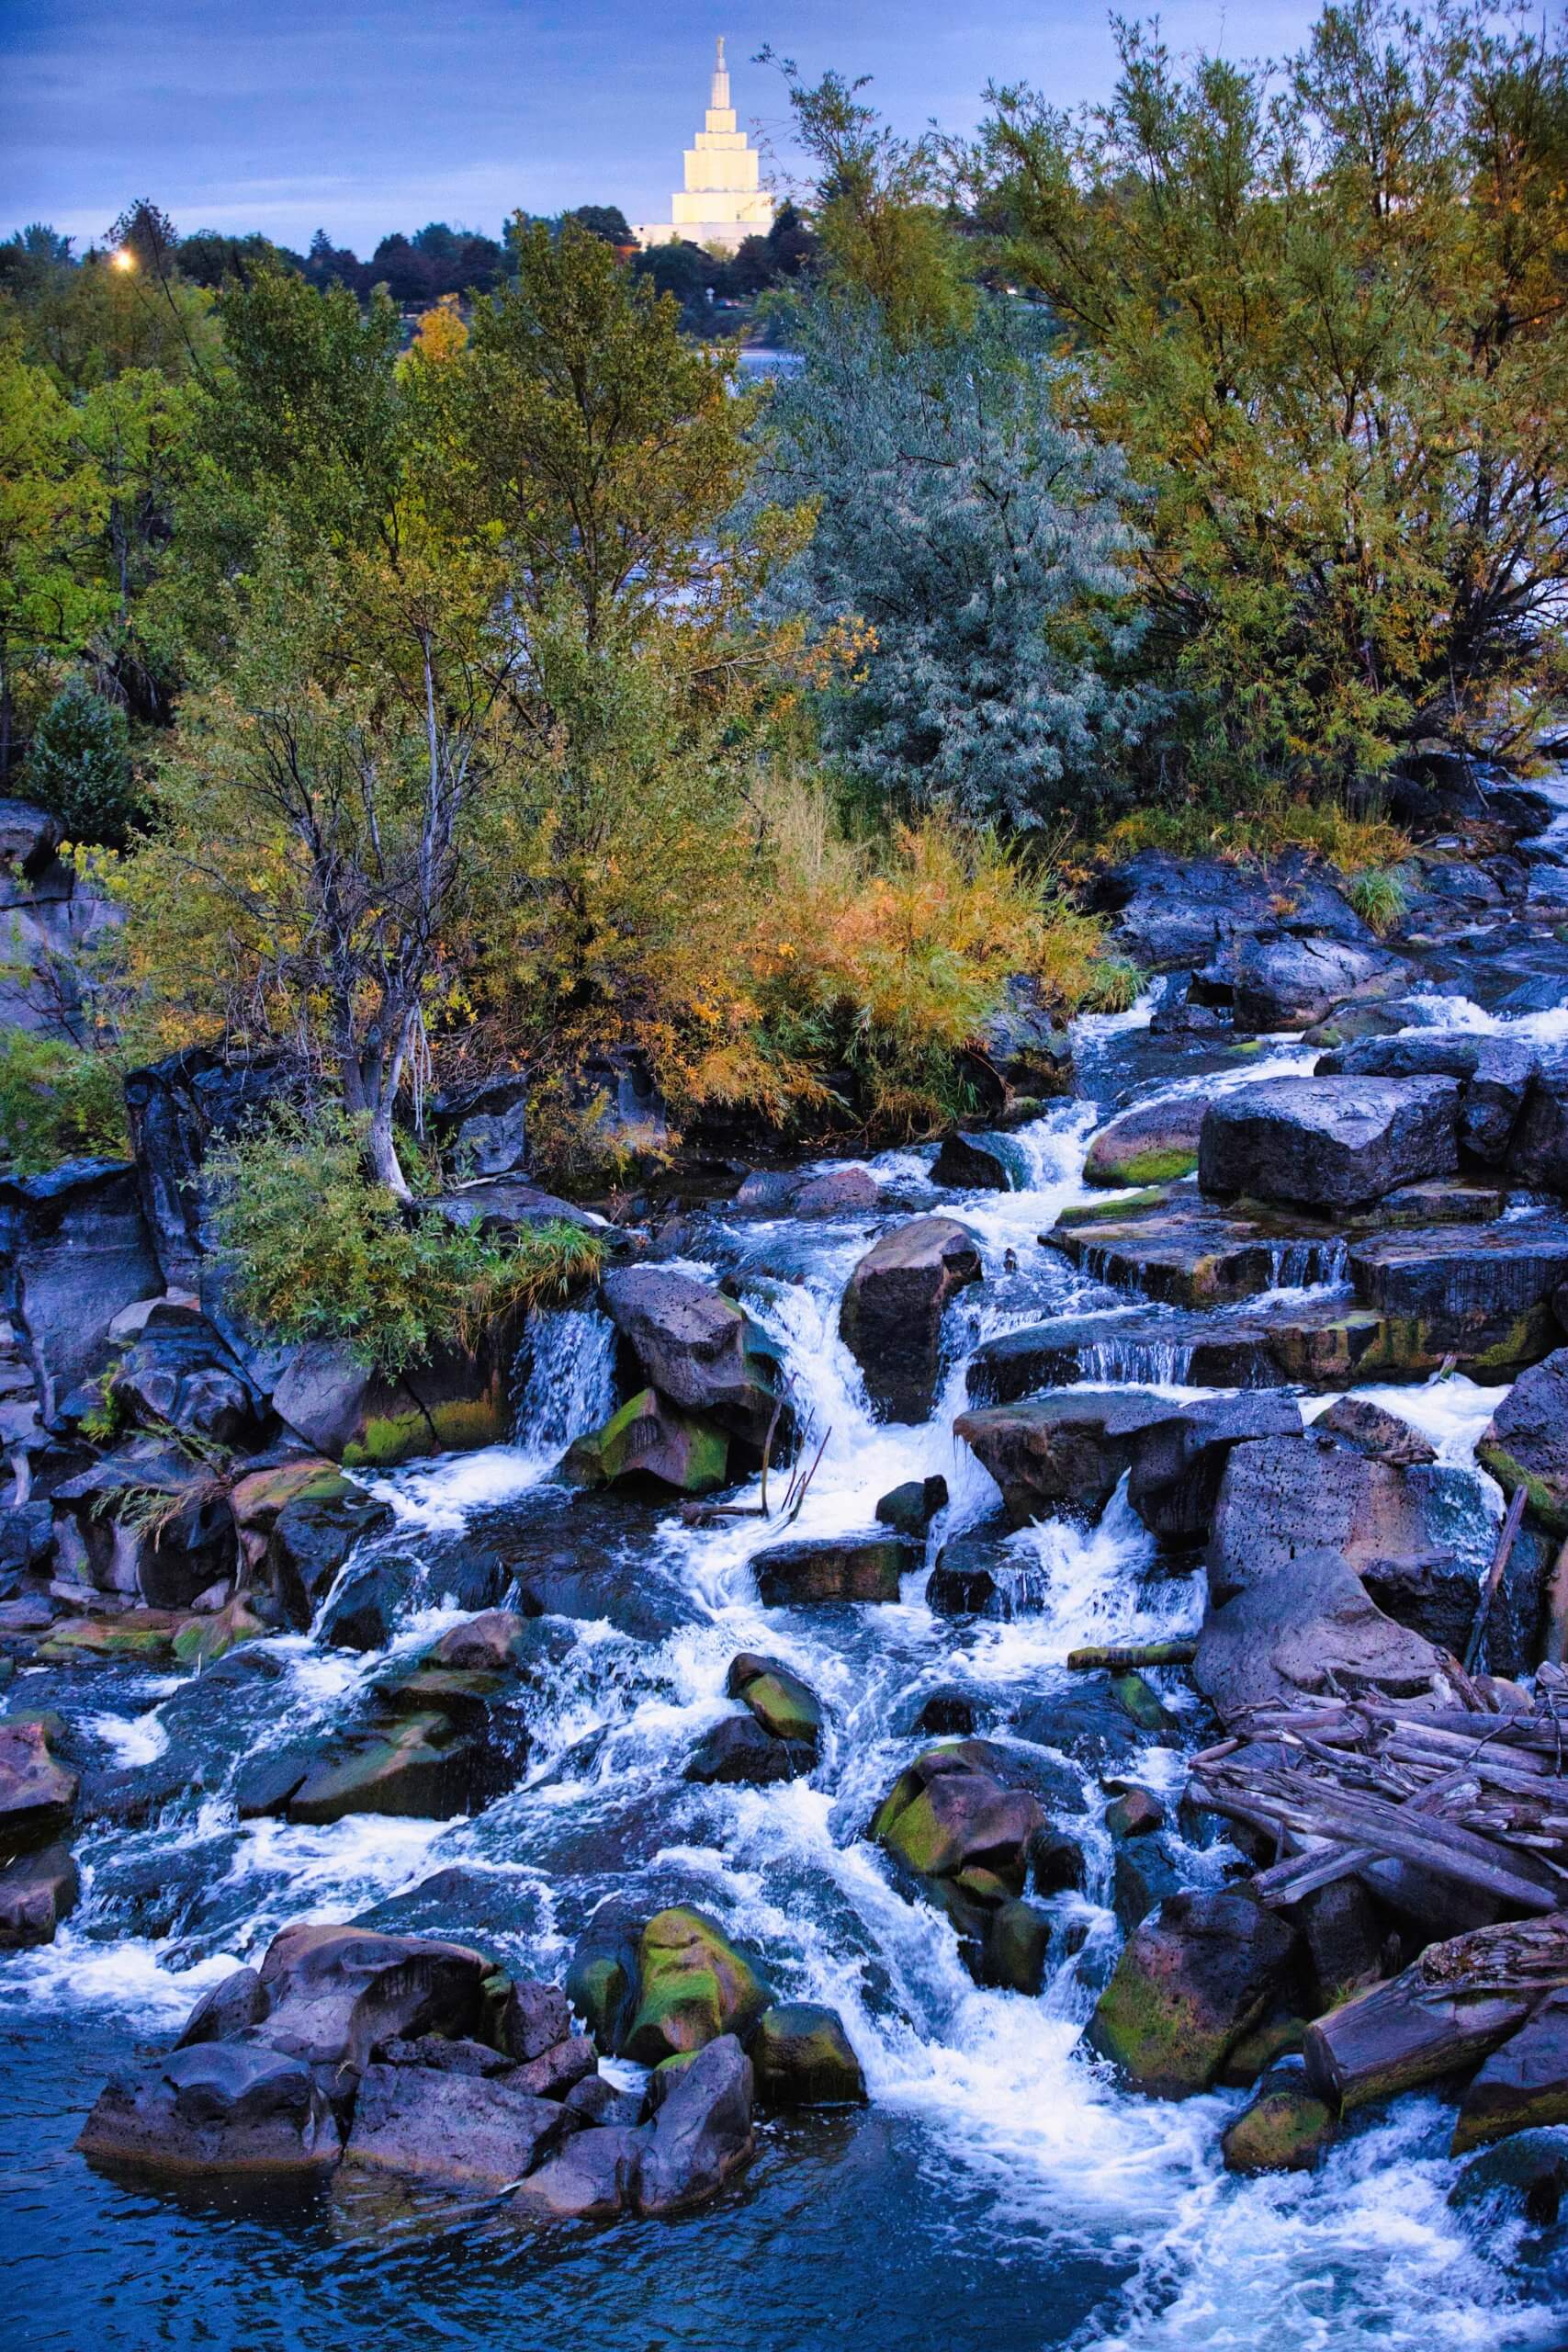 Idaho Falls and Beyond